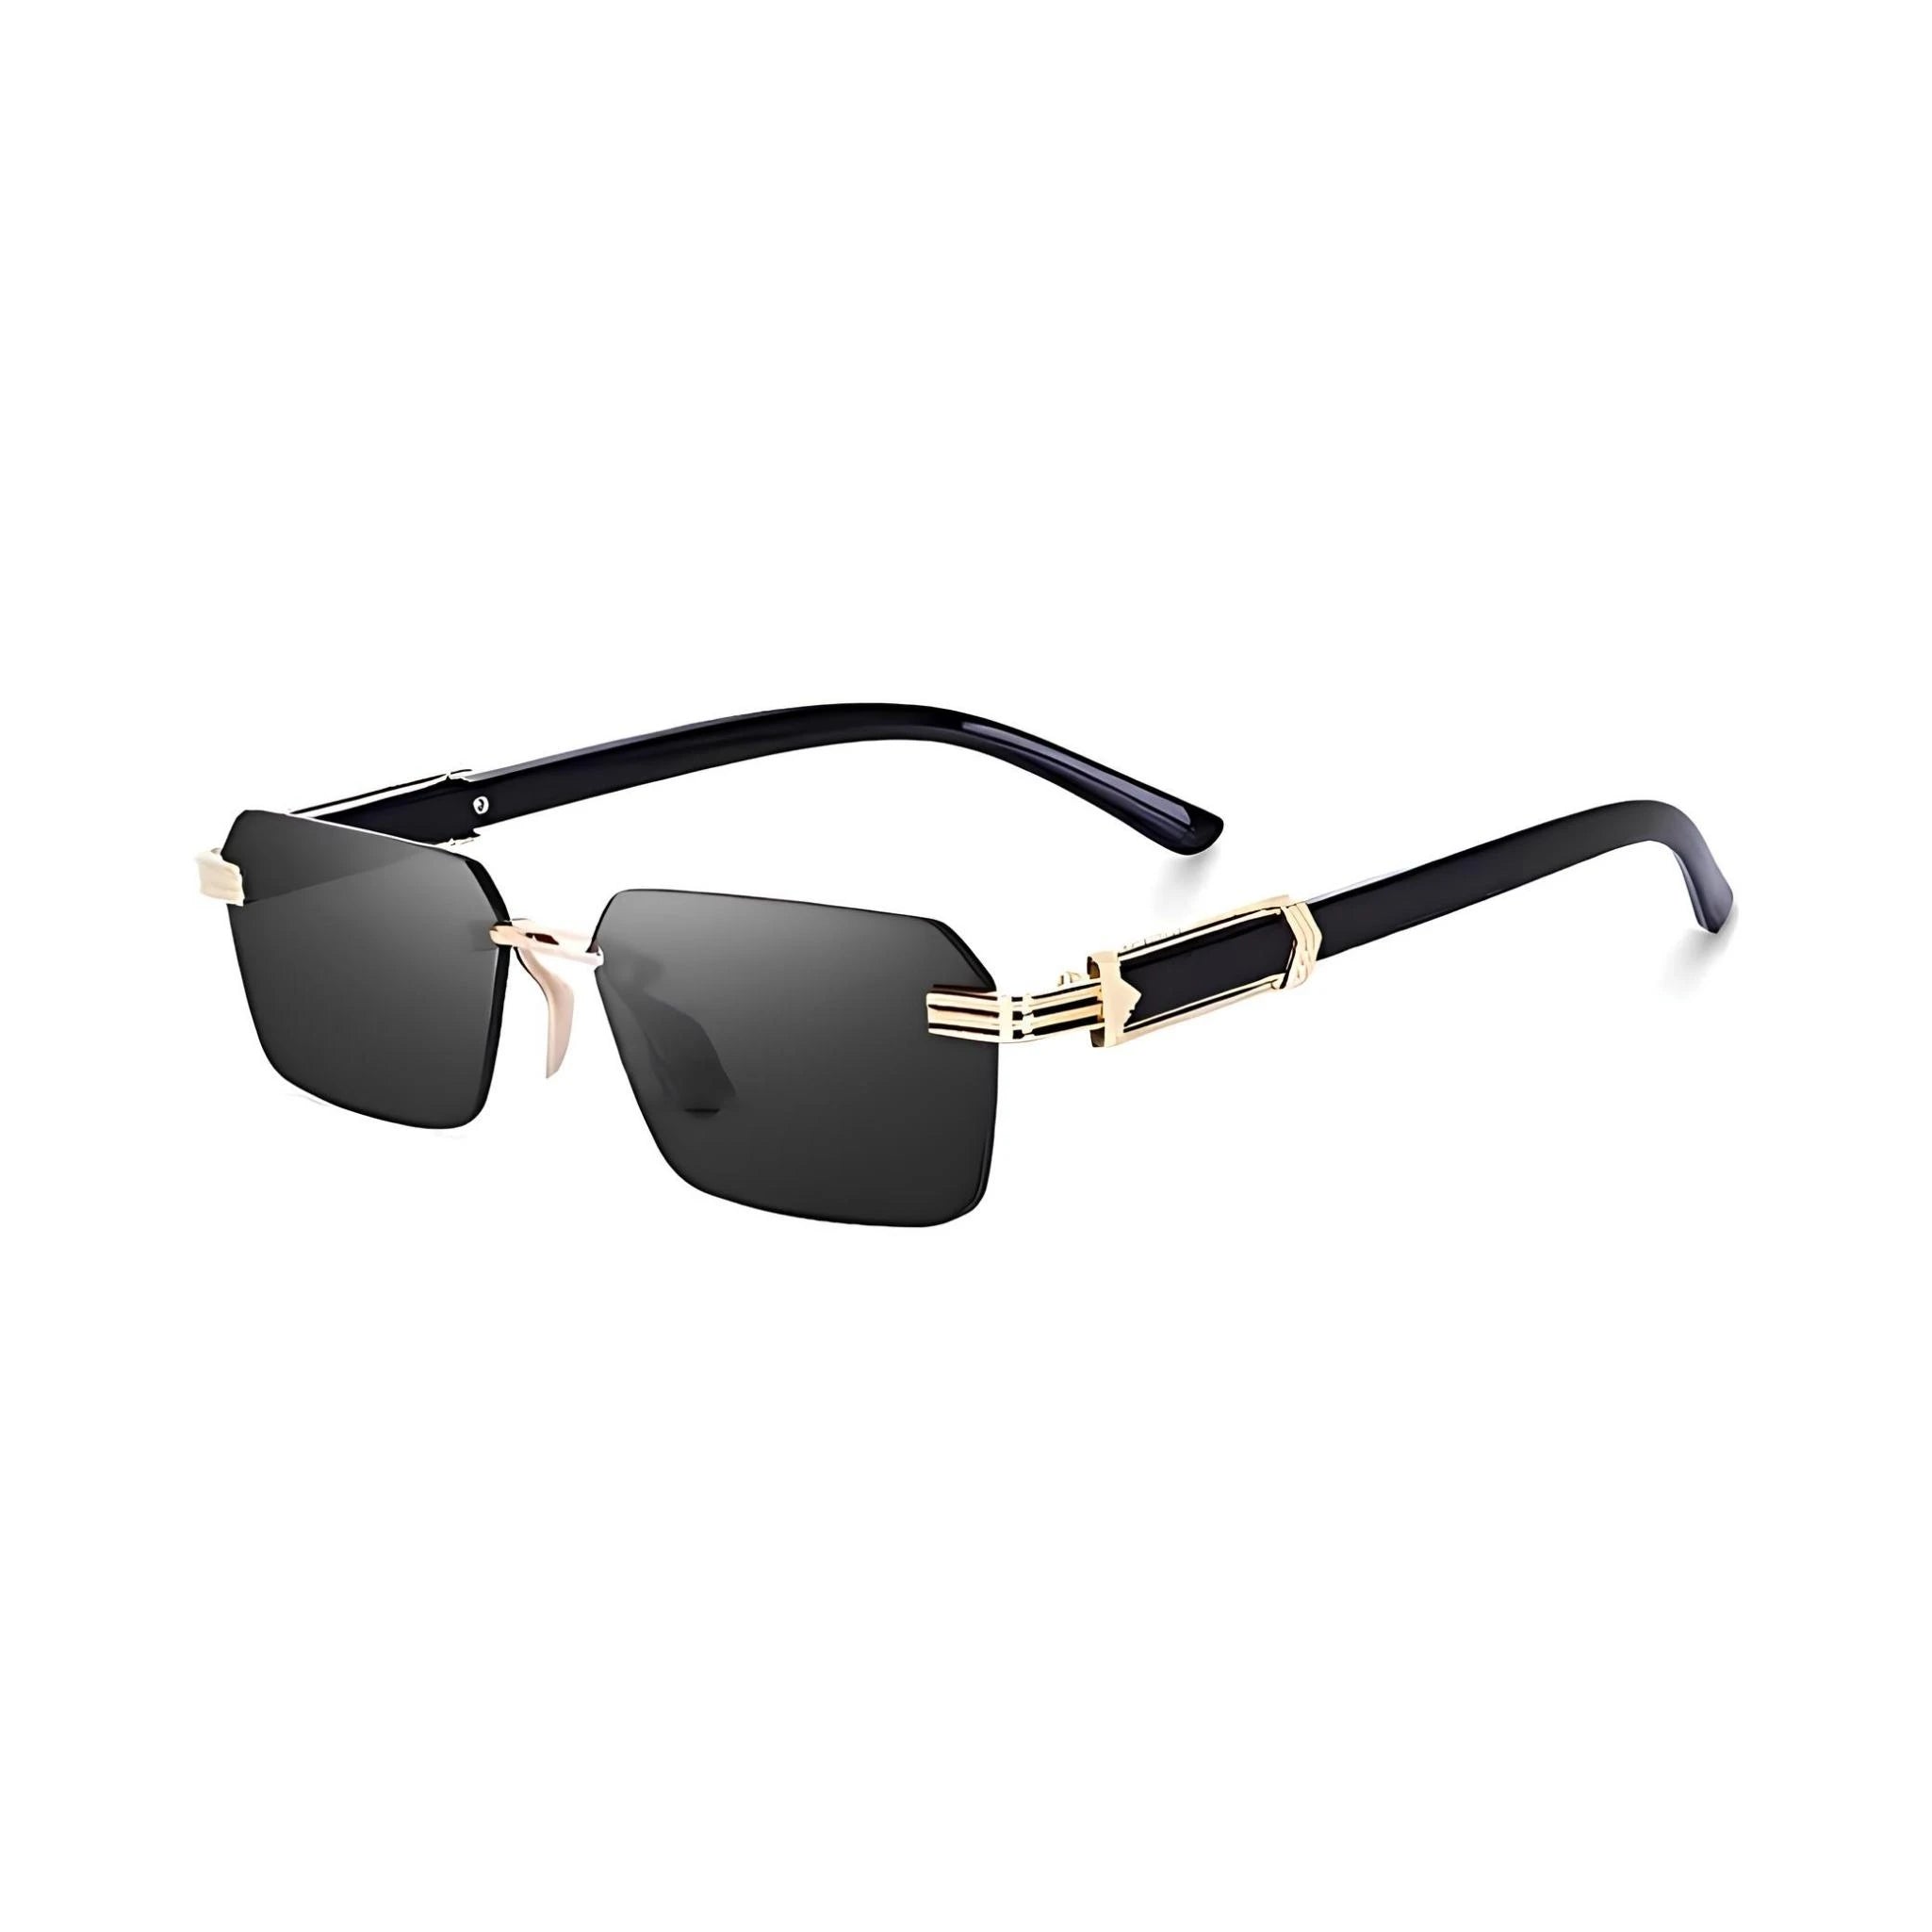 HautRim Series Rectangular Sunglasses For Men & Women - Black